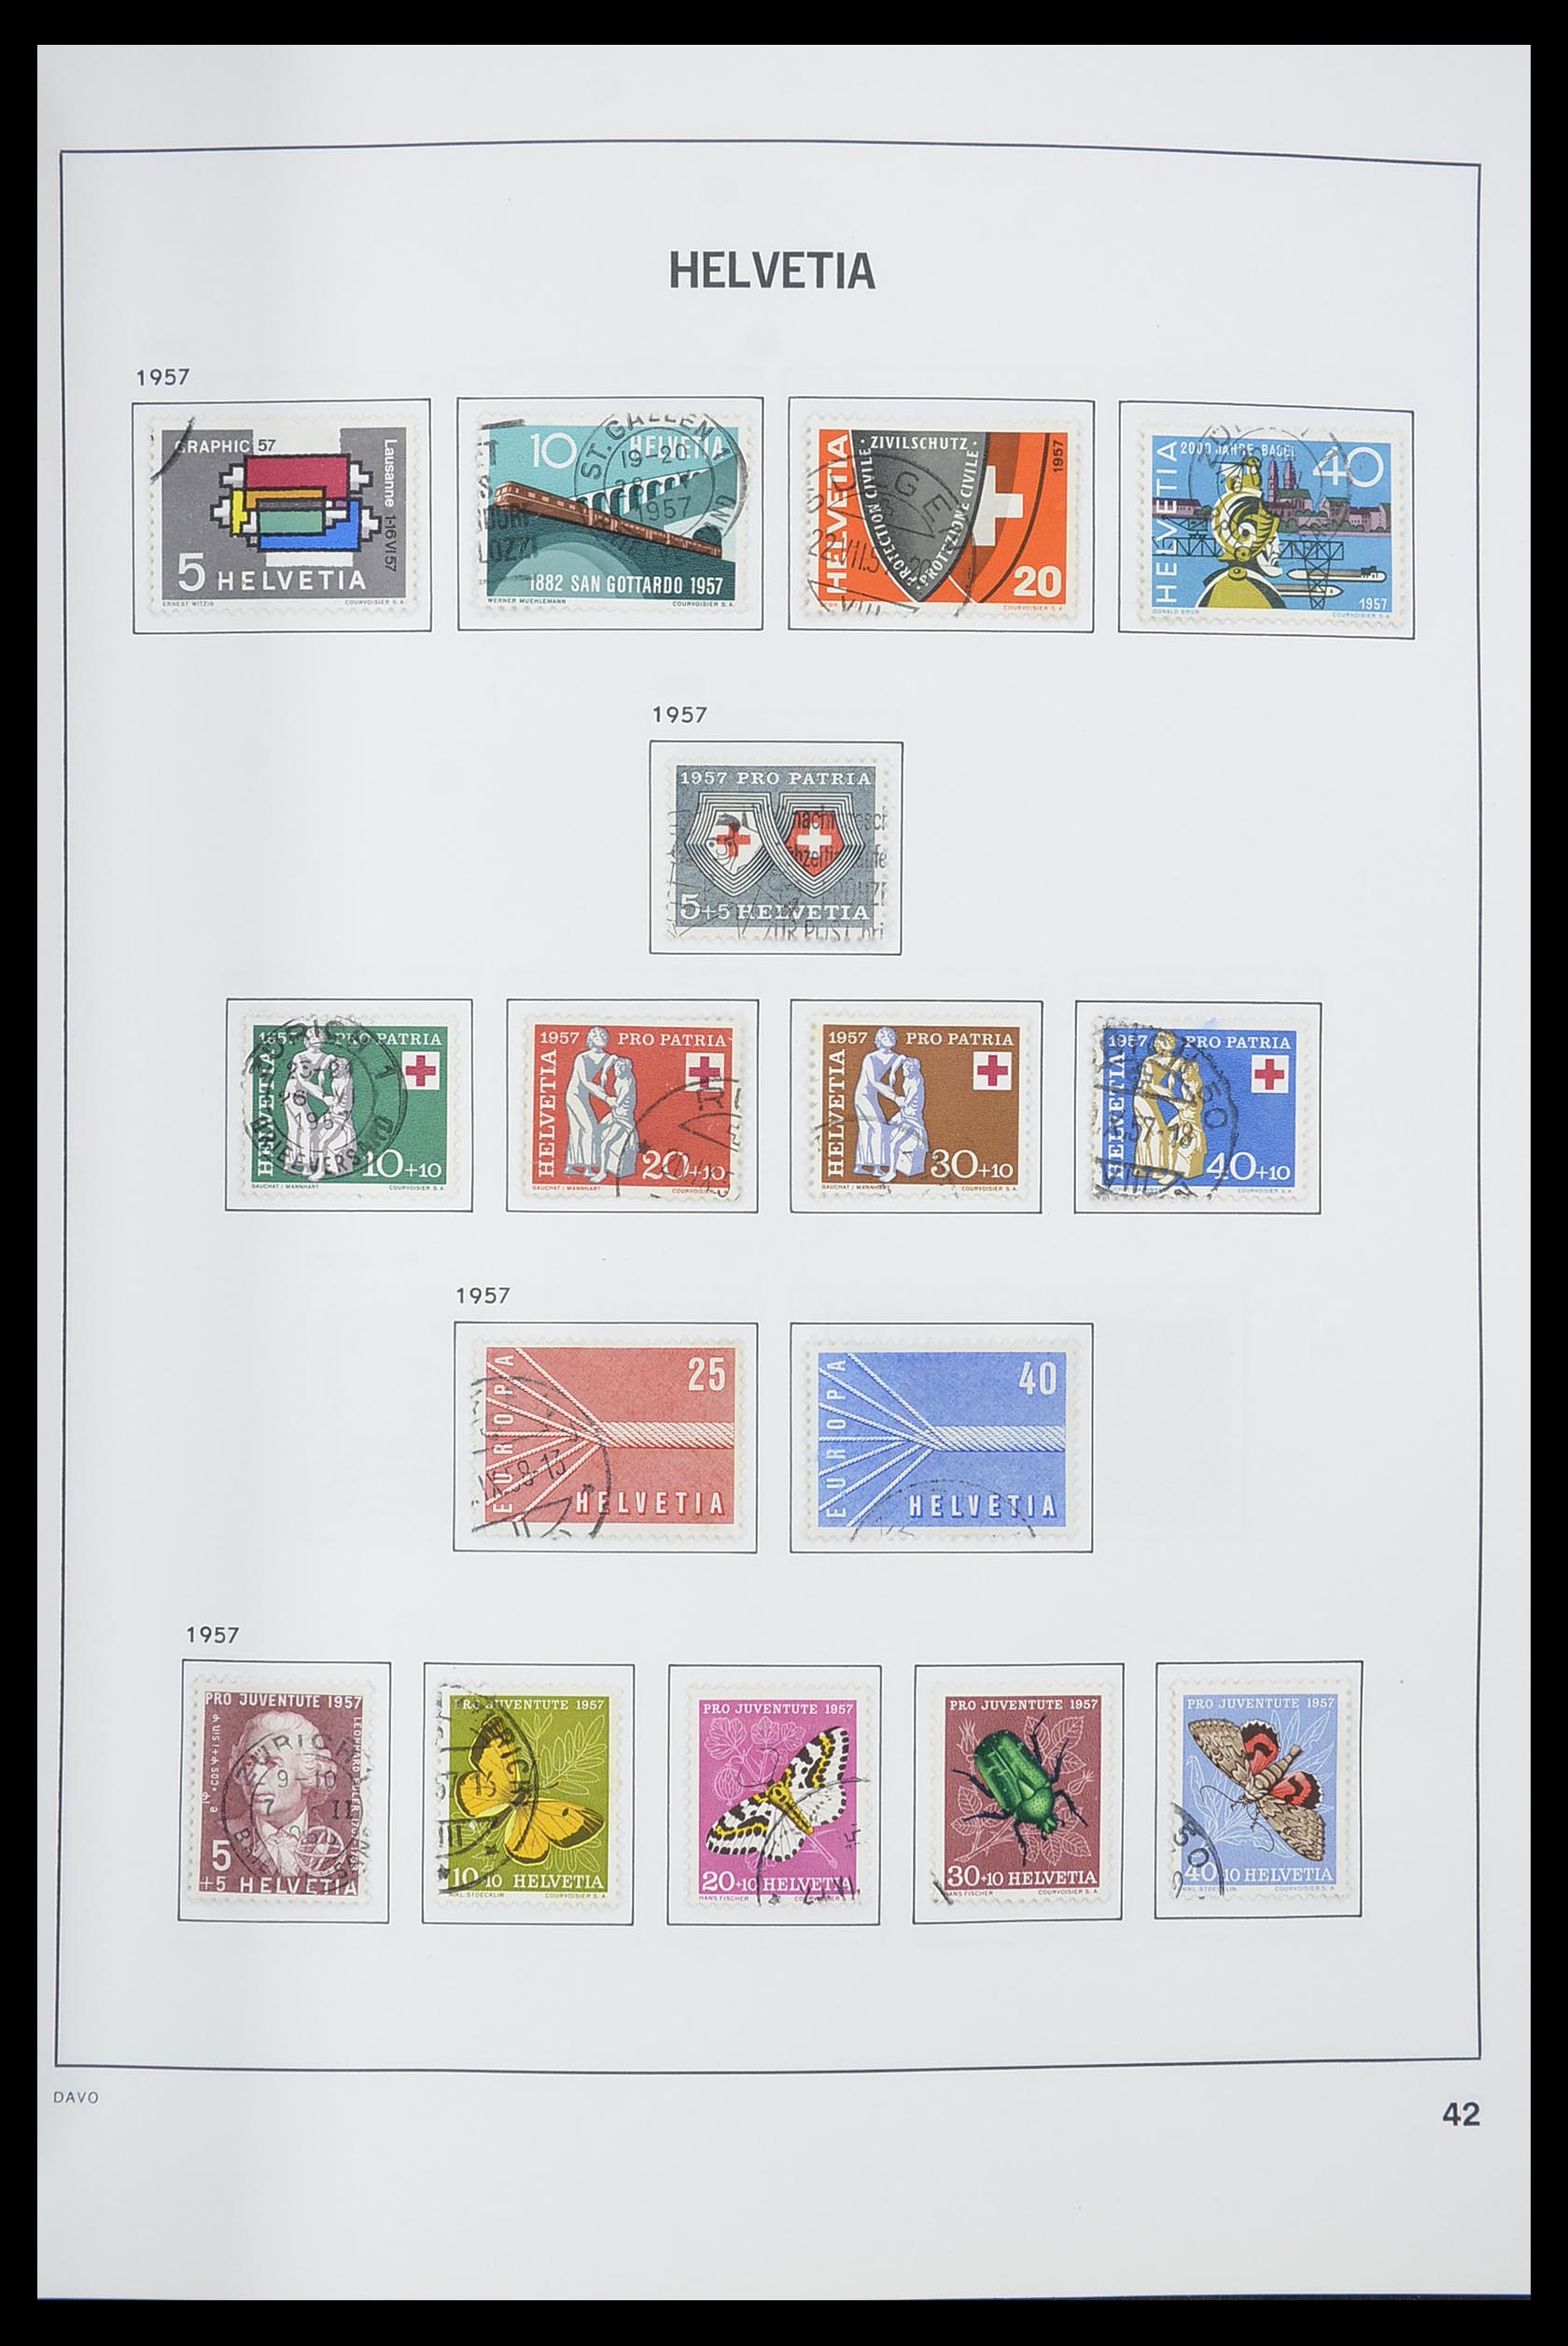 33559 043 - Stamp collection 33559 Switzerland 1850-2000.